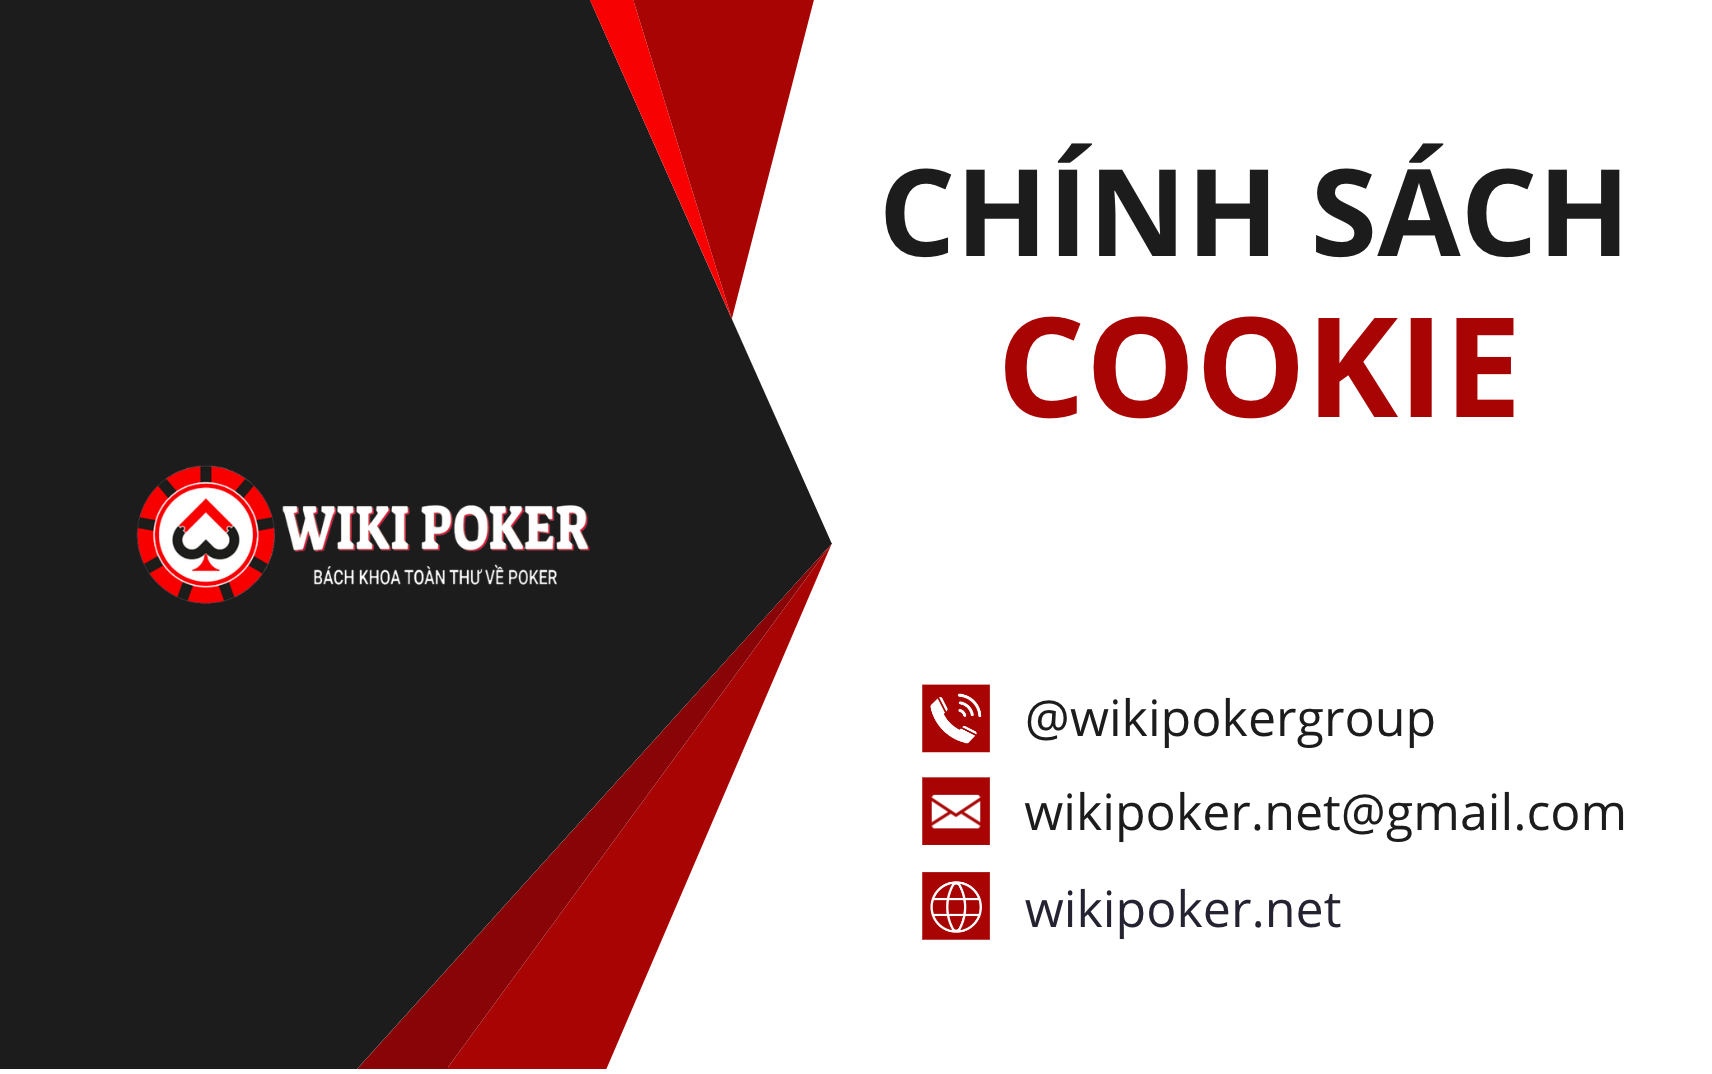 Chính sách cookie của Wikipoker